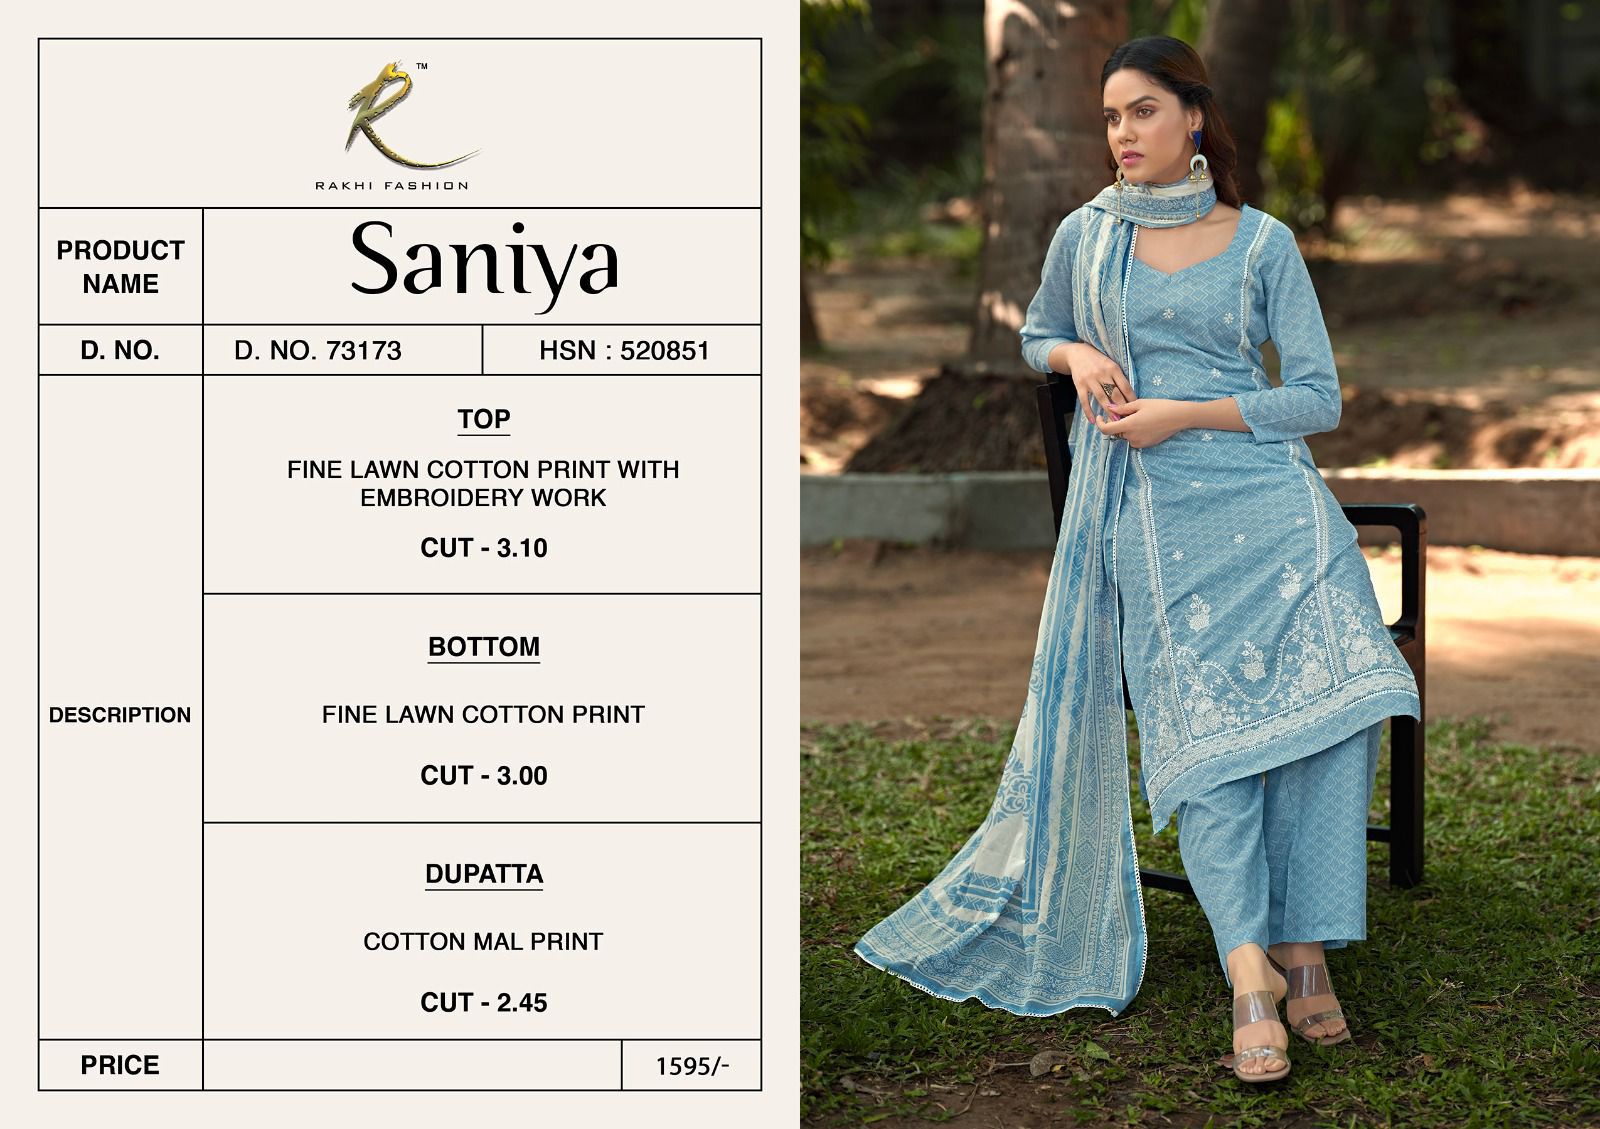 Saniya Rakhi Fashion Lawn Cotton Pant Style Suits